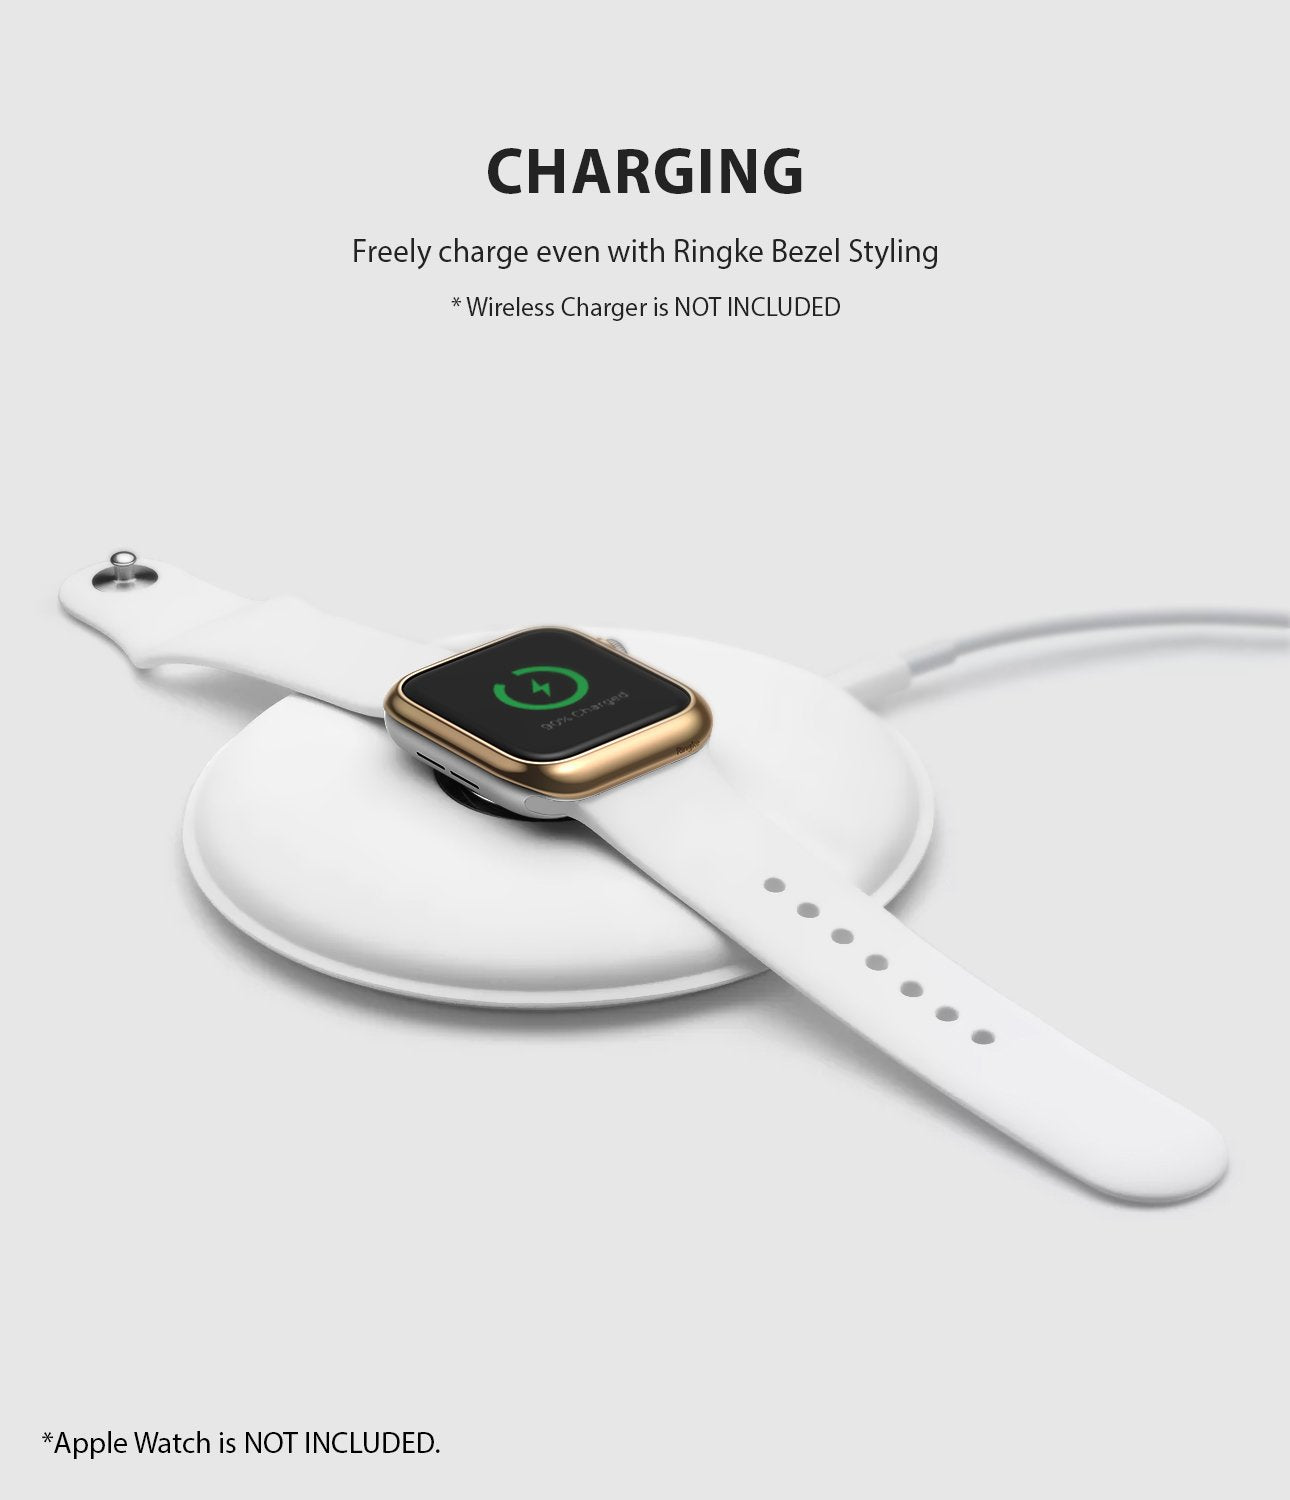 ringke bezel styling 40-05 glossy gold stainless steel on apple watch series 6 / 5 / 4 / SE 40mm wireless charging